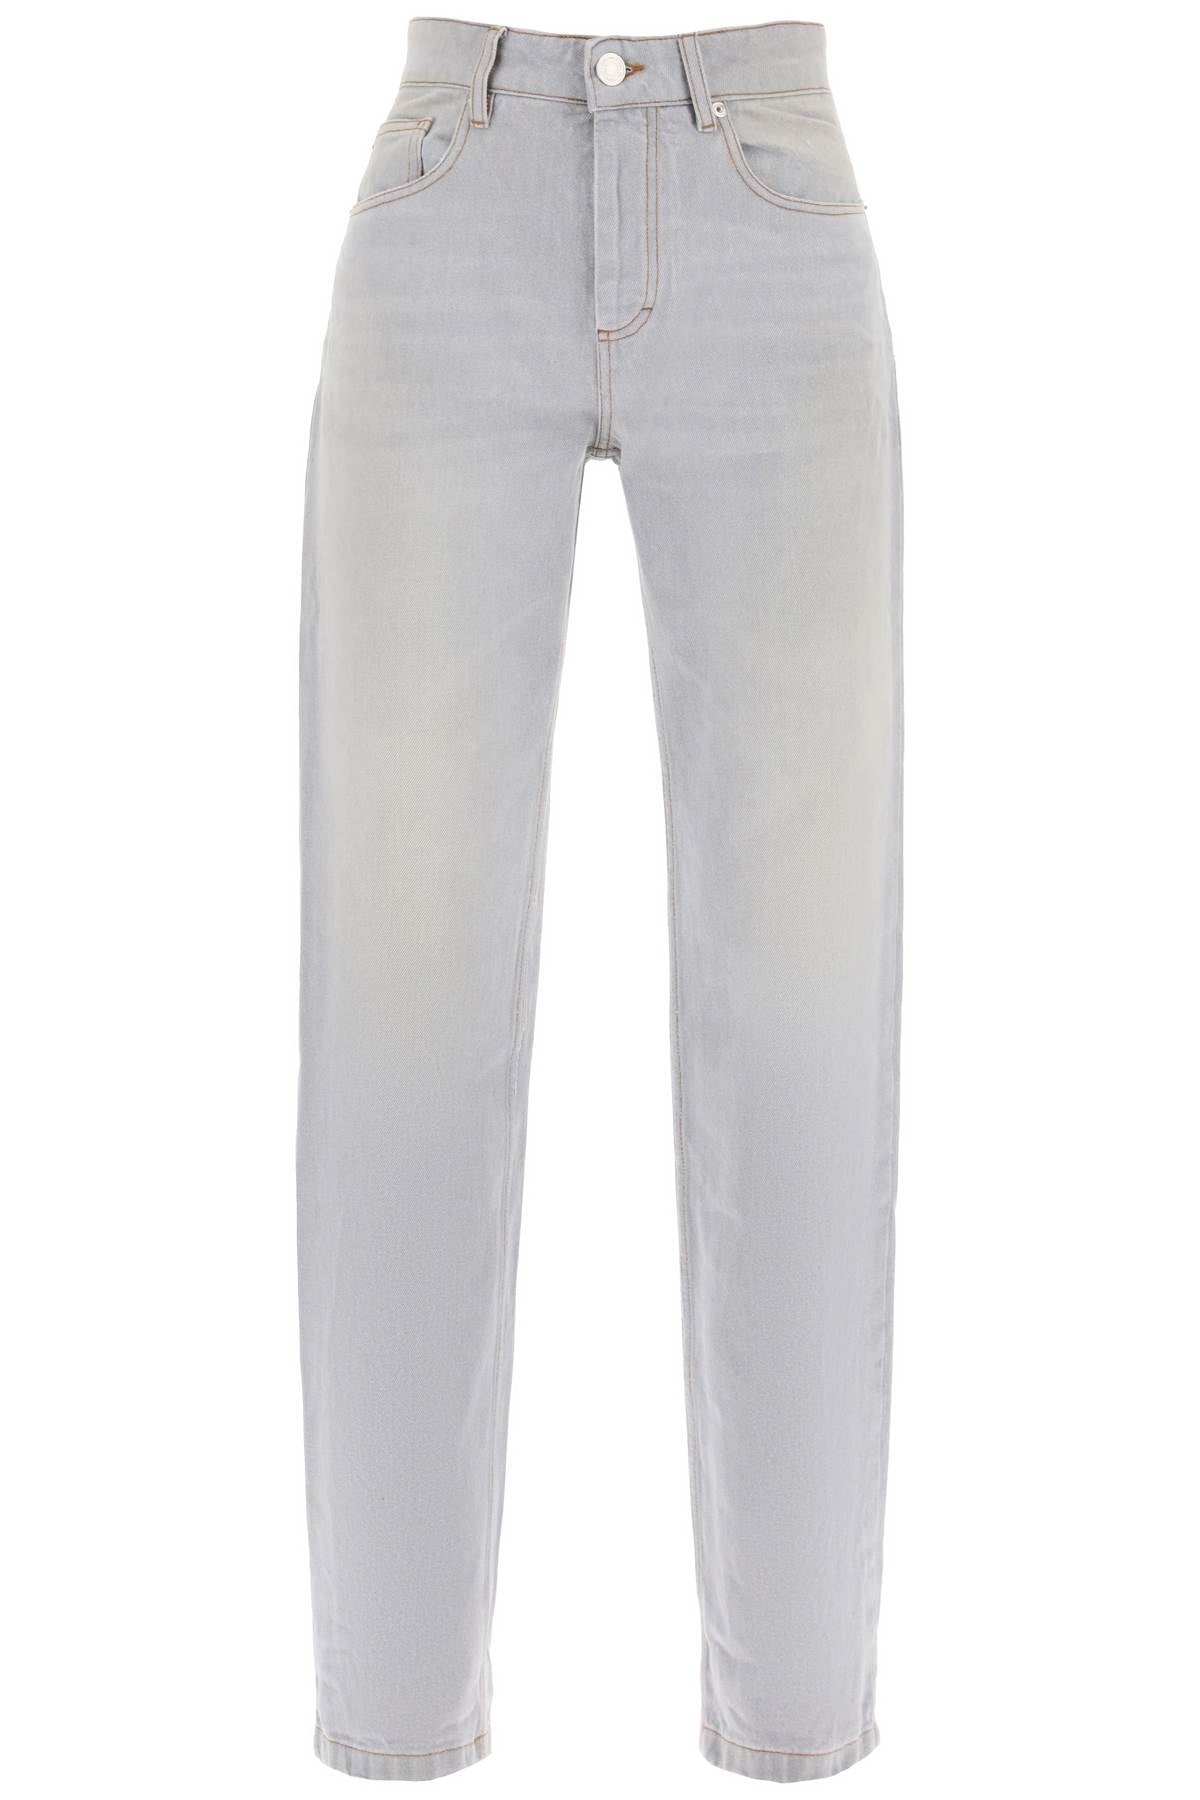 Ami paris straight cut jeans UTR500 DE0019 VINTAGE GREY